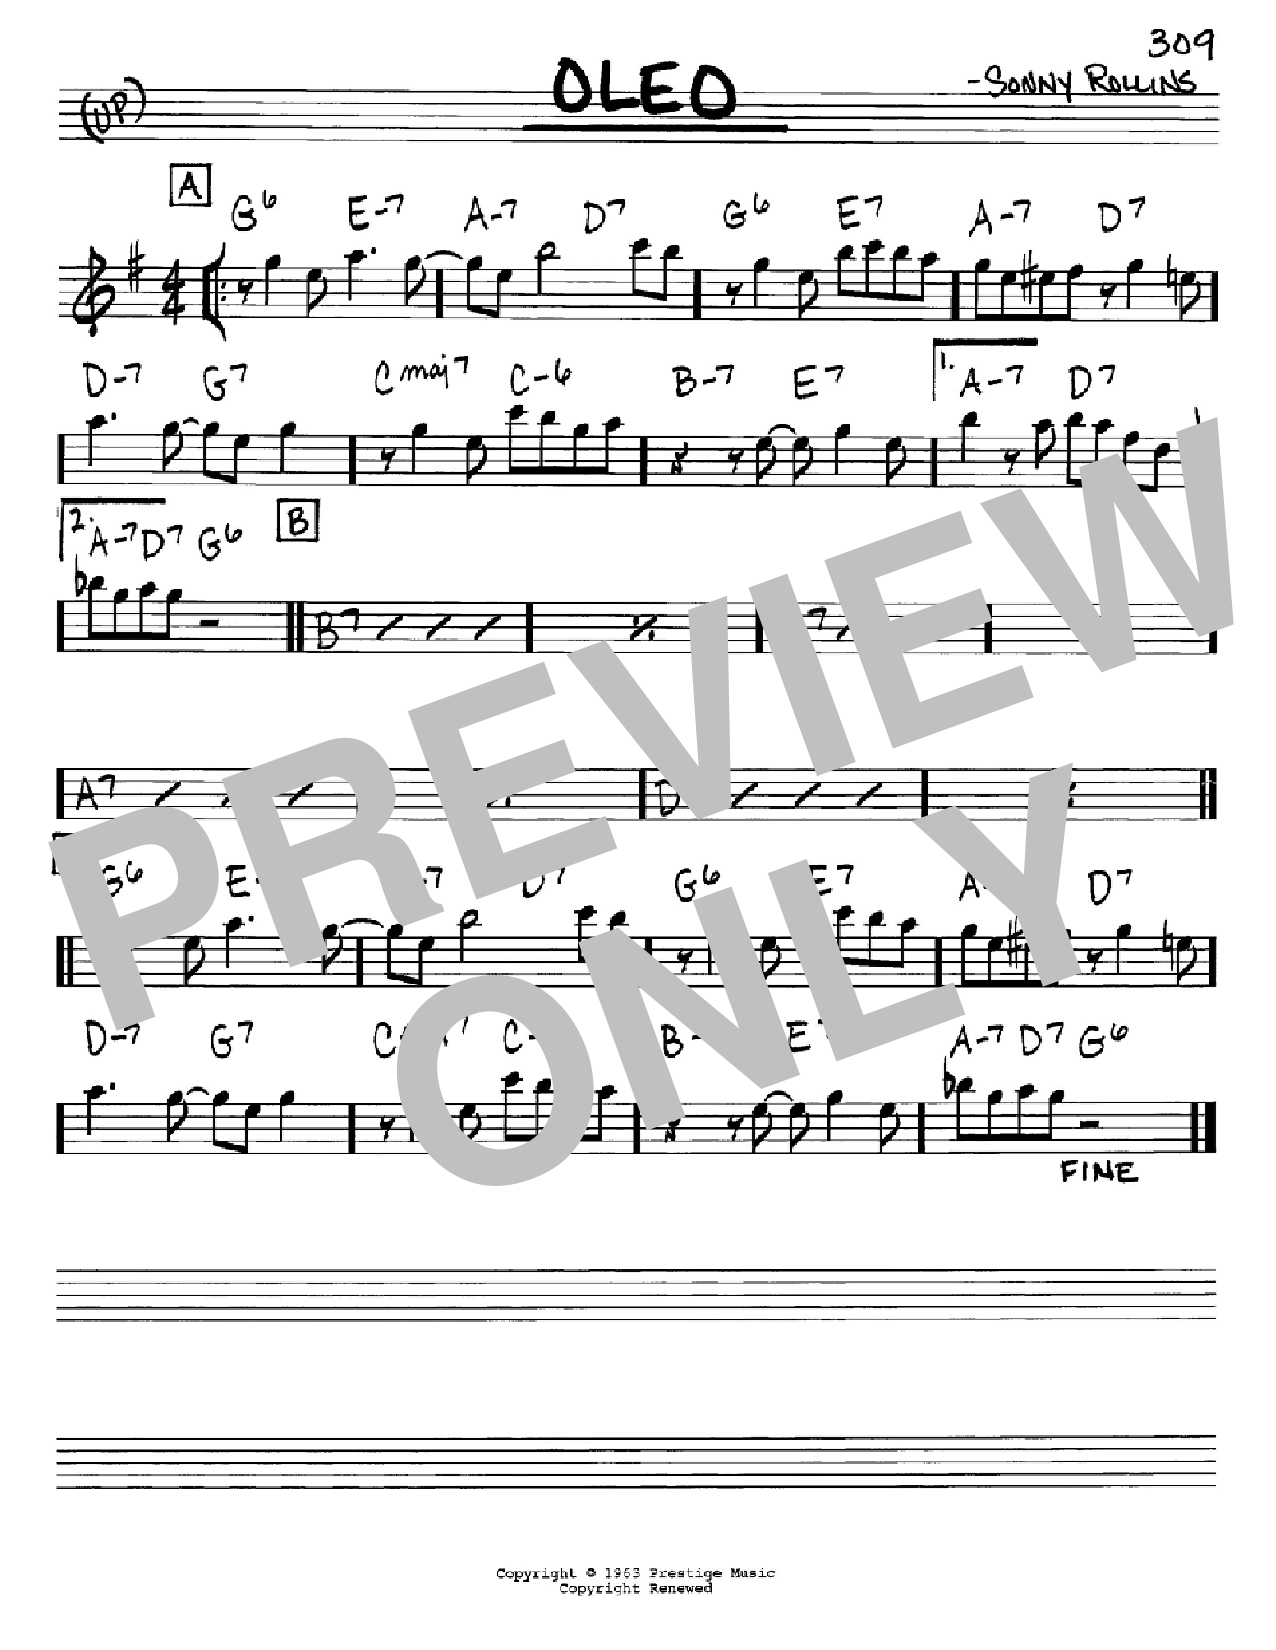 Download John Coltrane Oleo Sheet Music